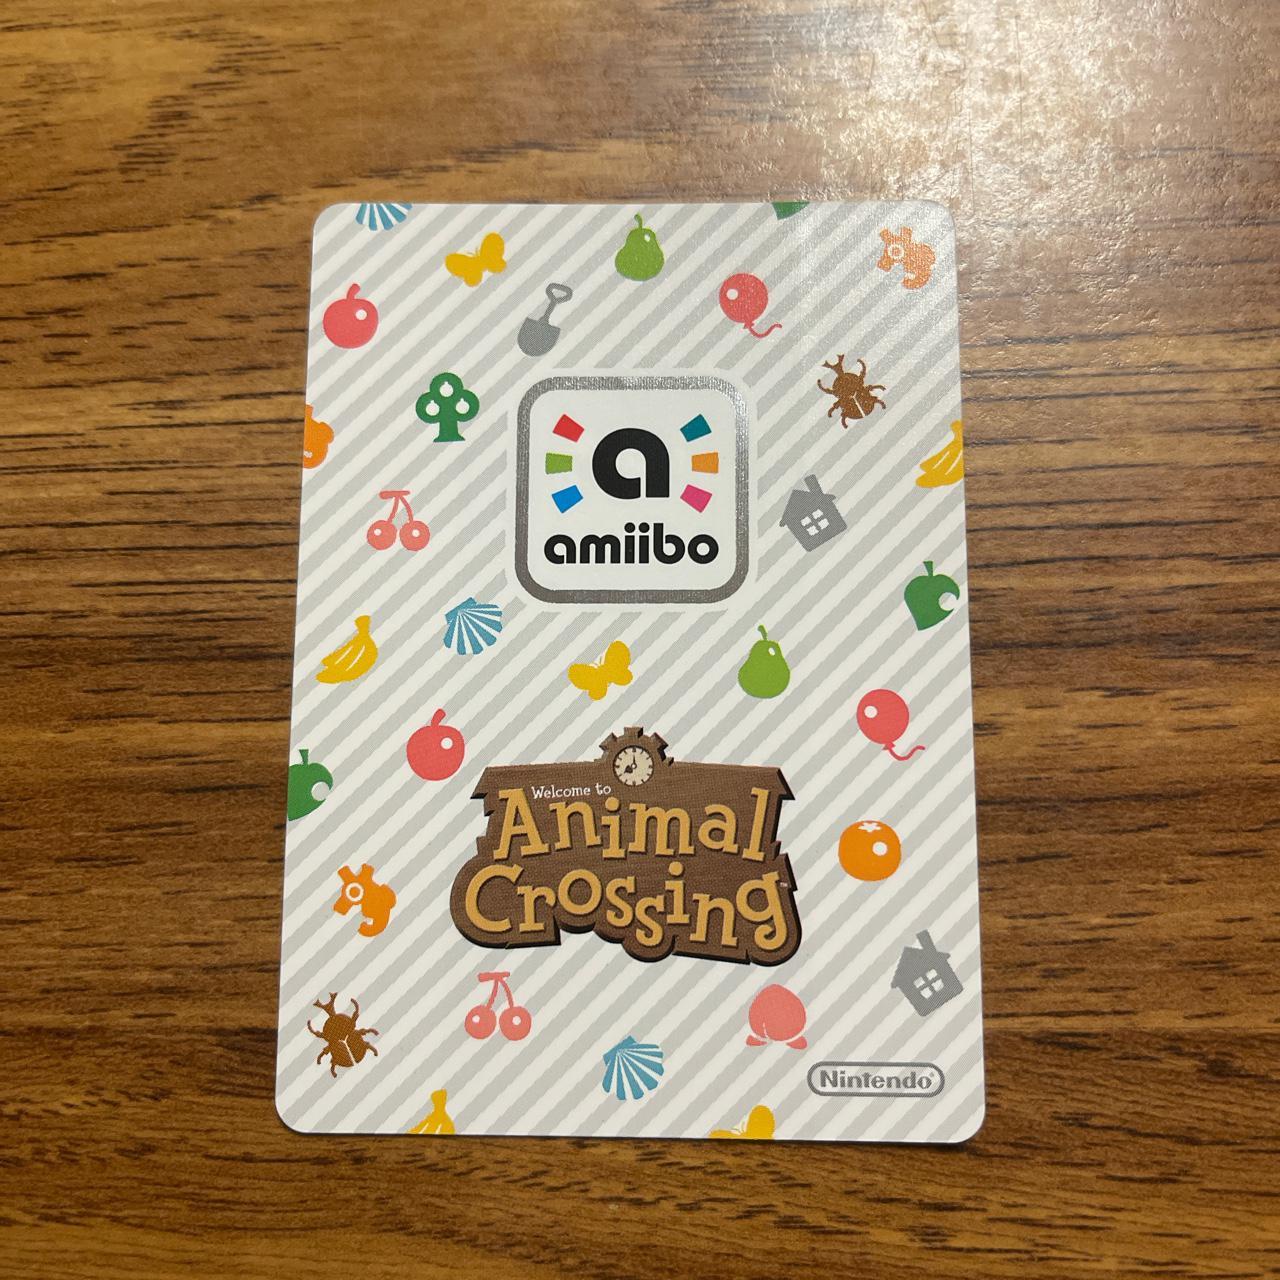 Product Image 2 - Harry Animal Crossing Amiibo!!
Brand new